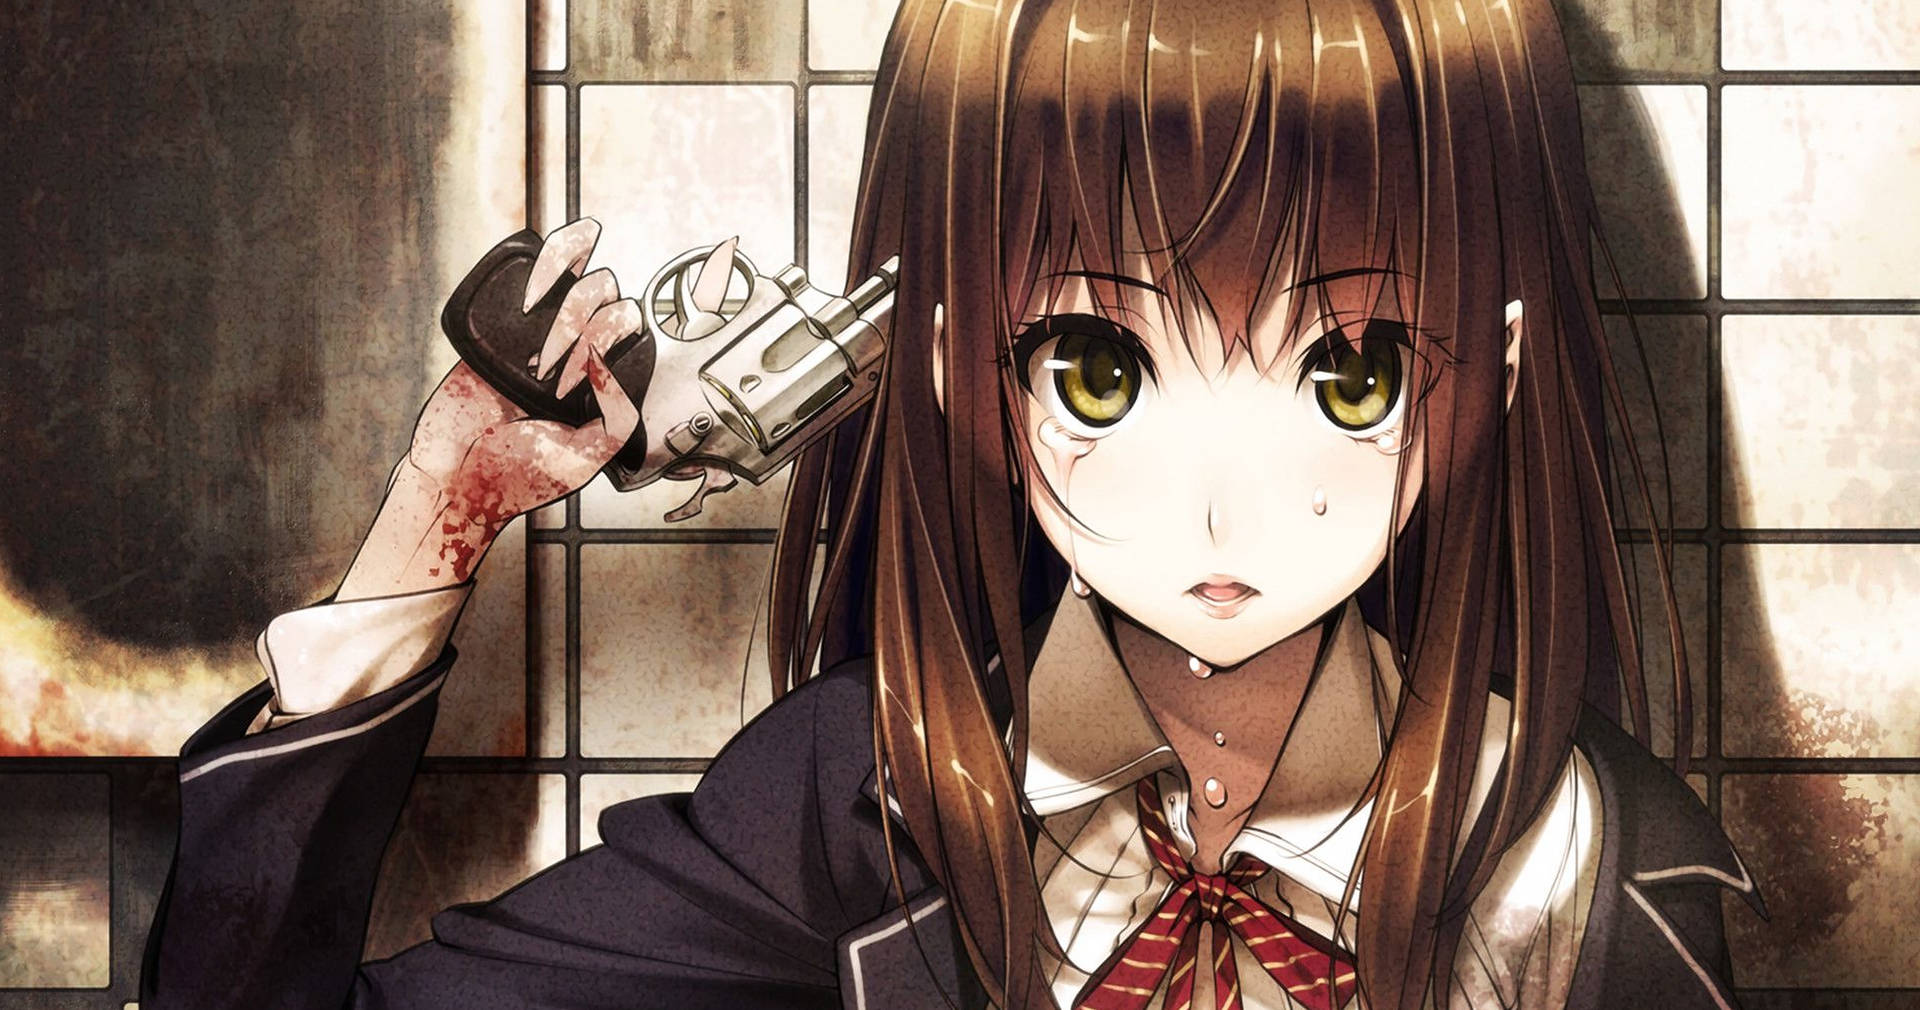 Depressed Anime Girl With Gun Background